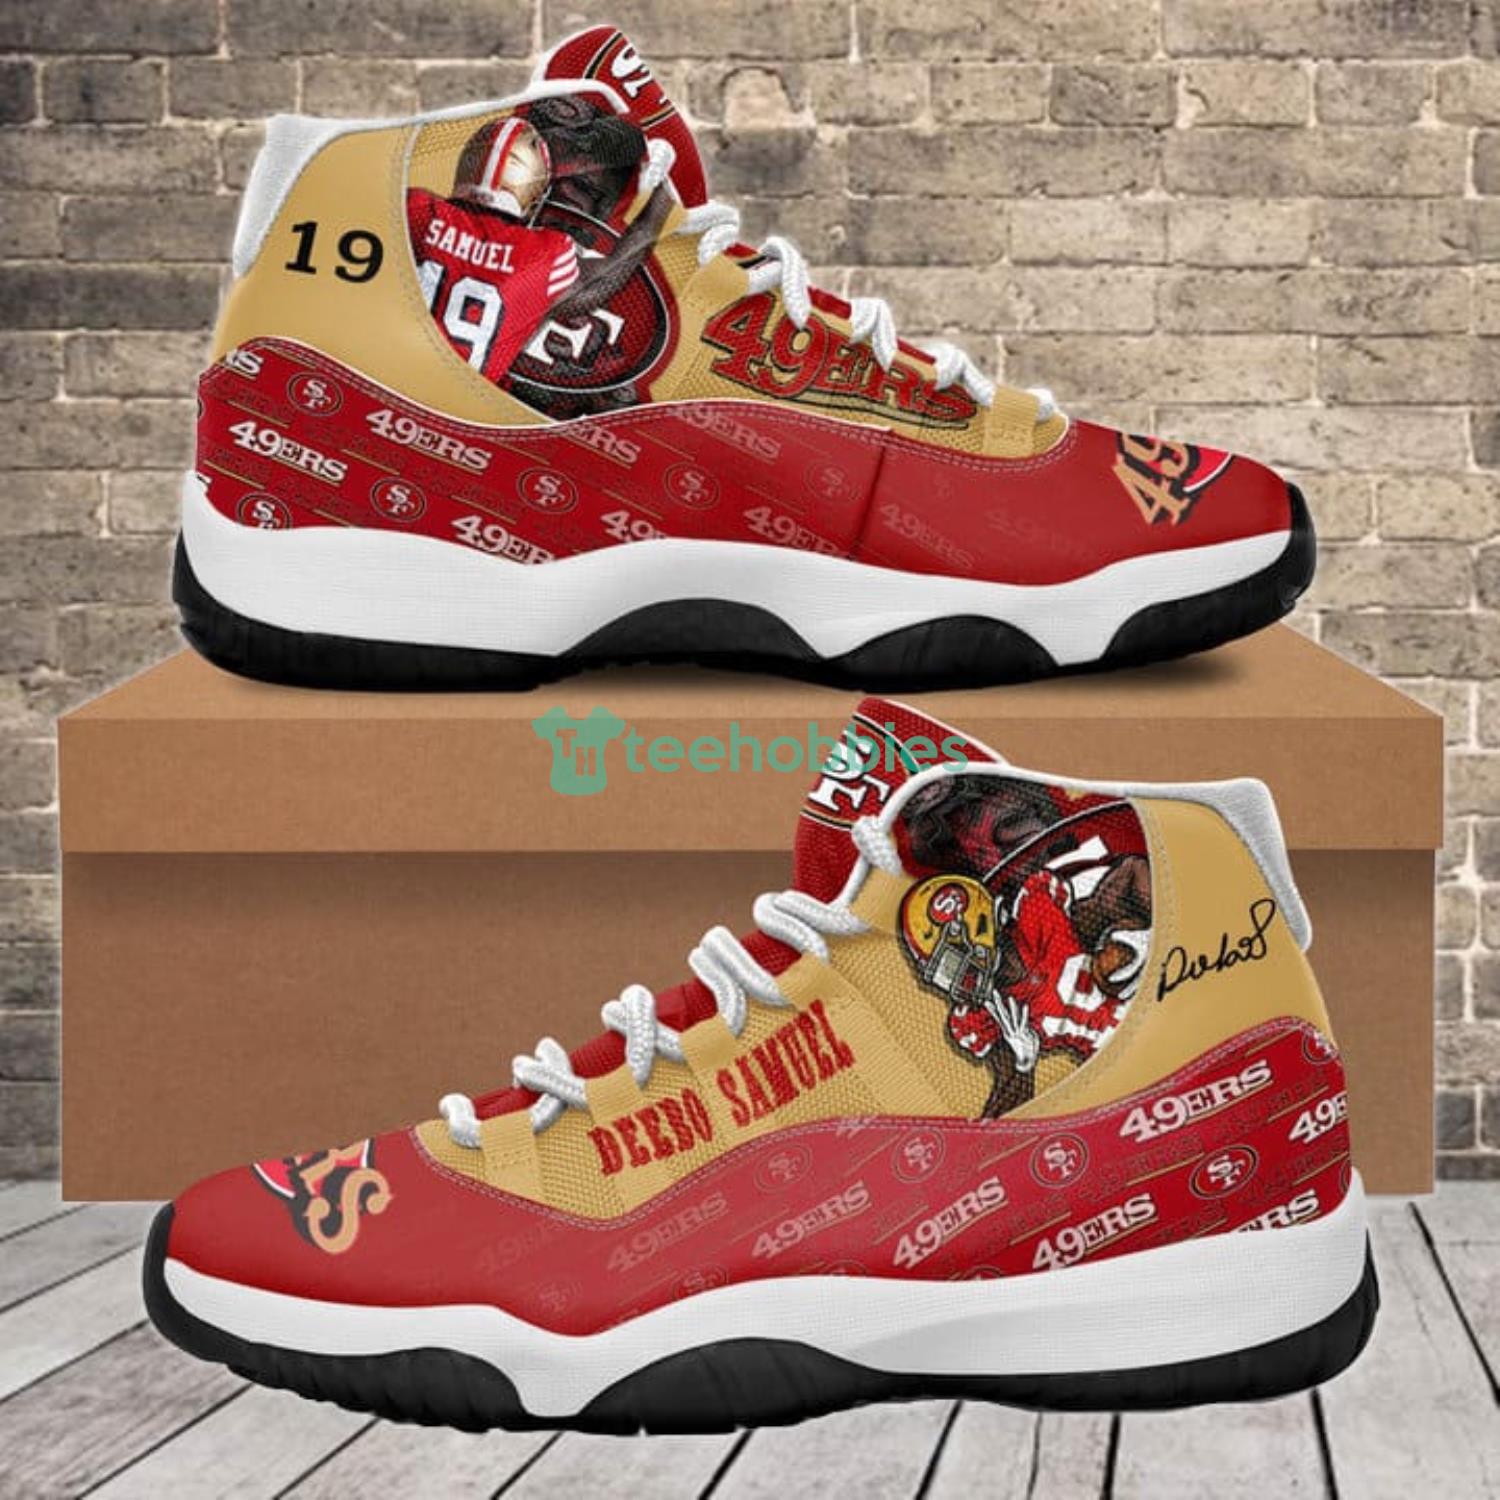 San Francisco 49ers Deebo Samuel Air Jordan 11 Shoes Sneaker For Fans